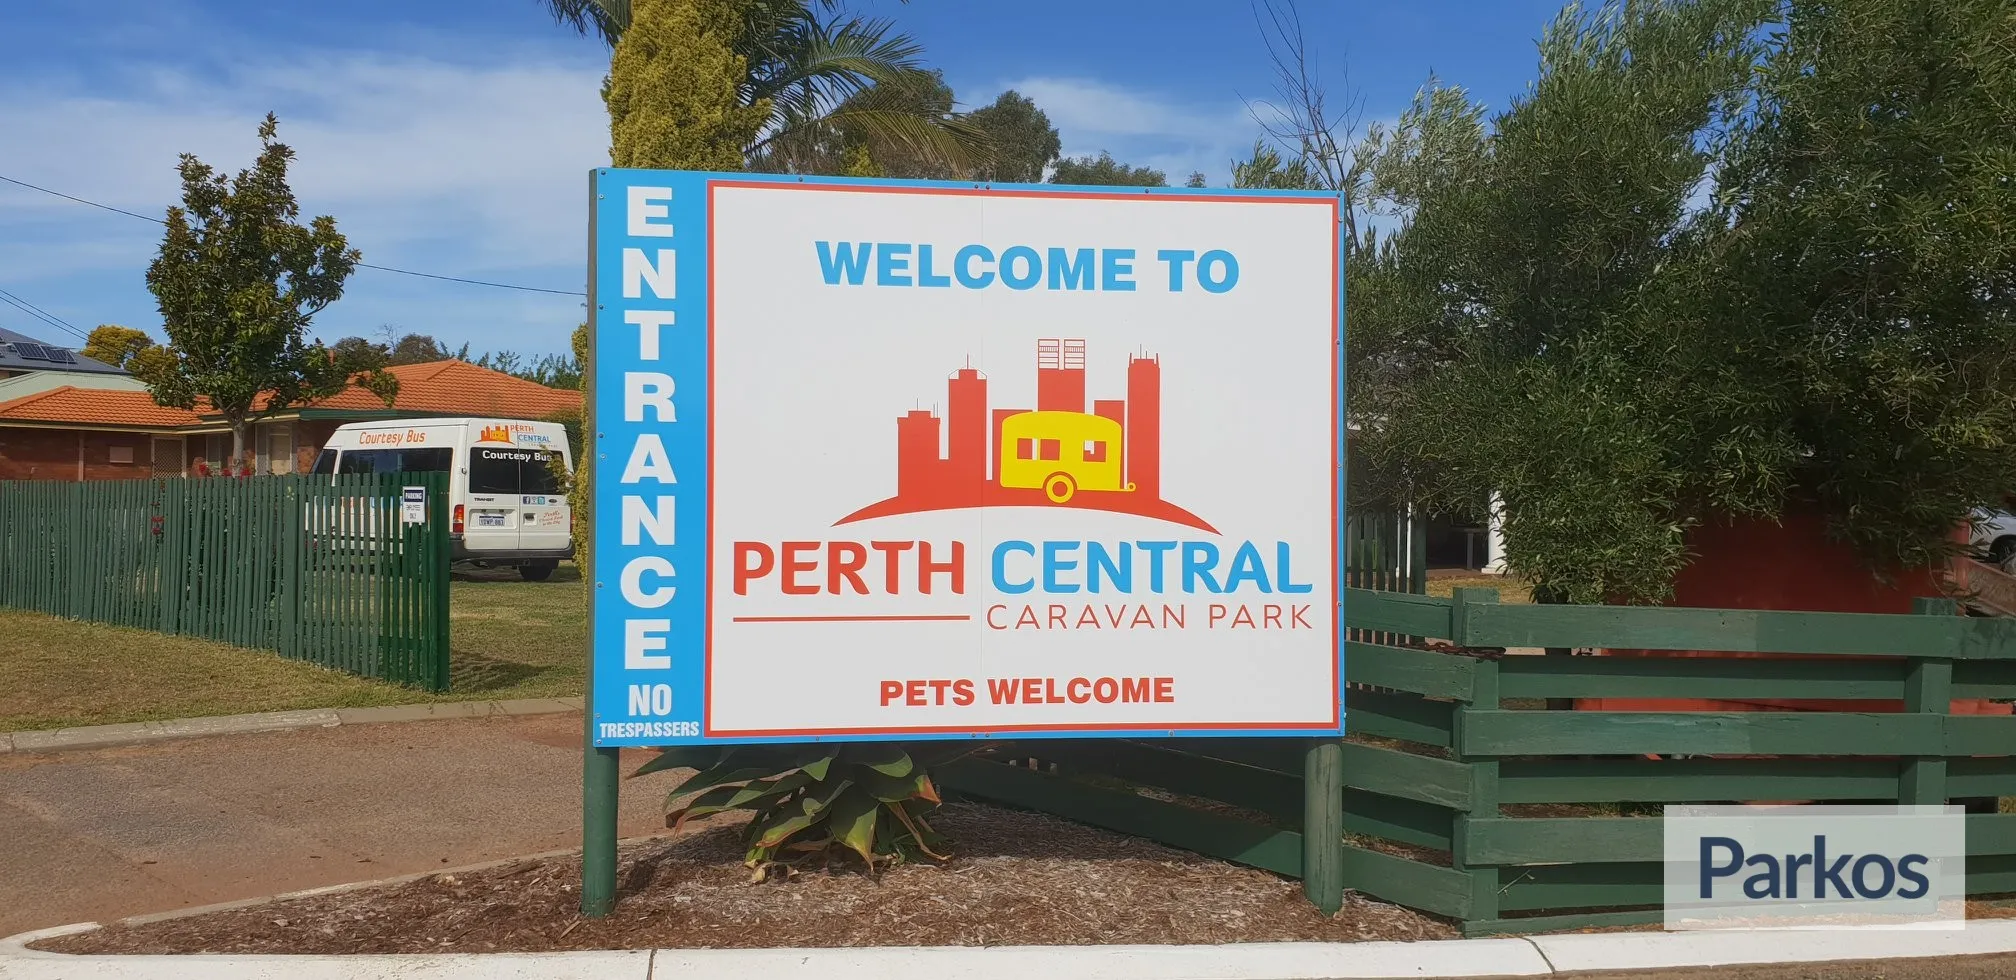 Perth Central Caravan Park - Perth Airport Parking - picture 1